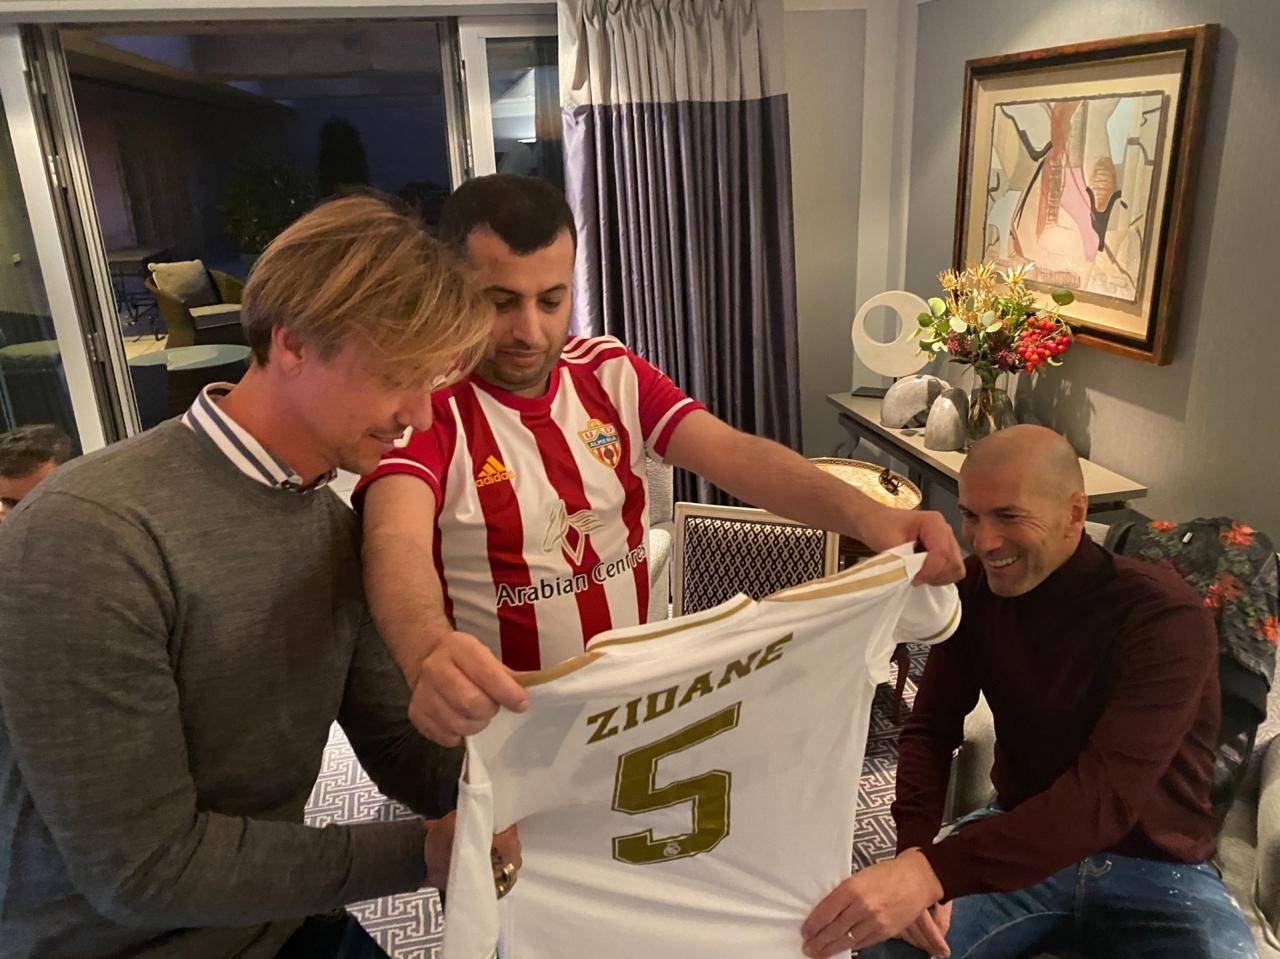 Turki Al-Sheikh poses with Zidane, recreates infamous ‘Materazzi headbutt’